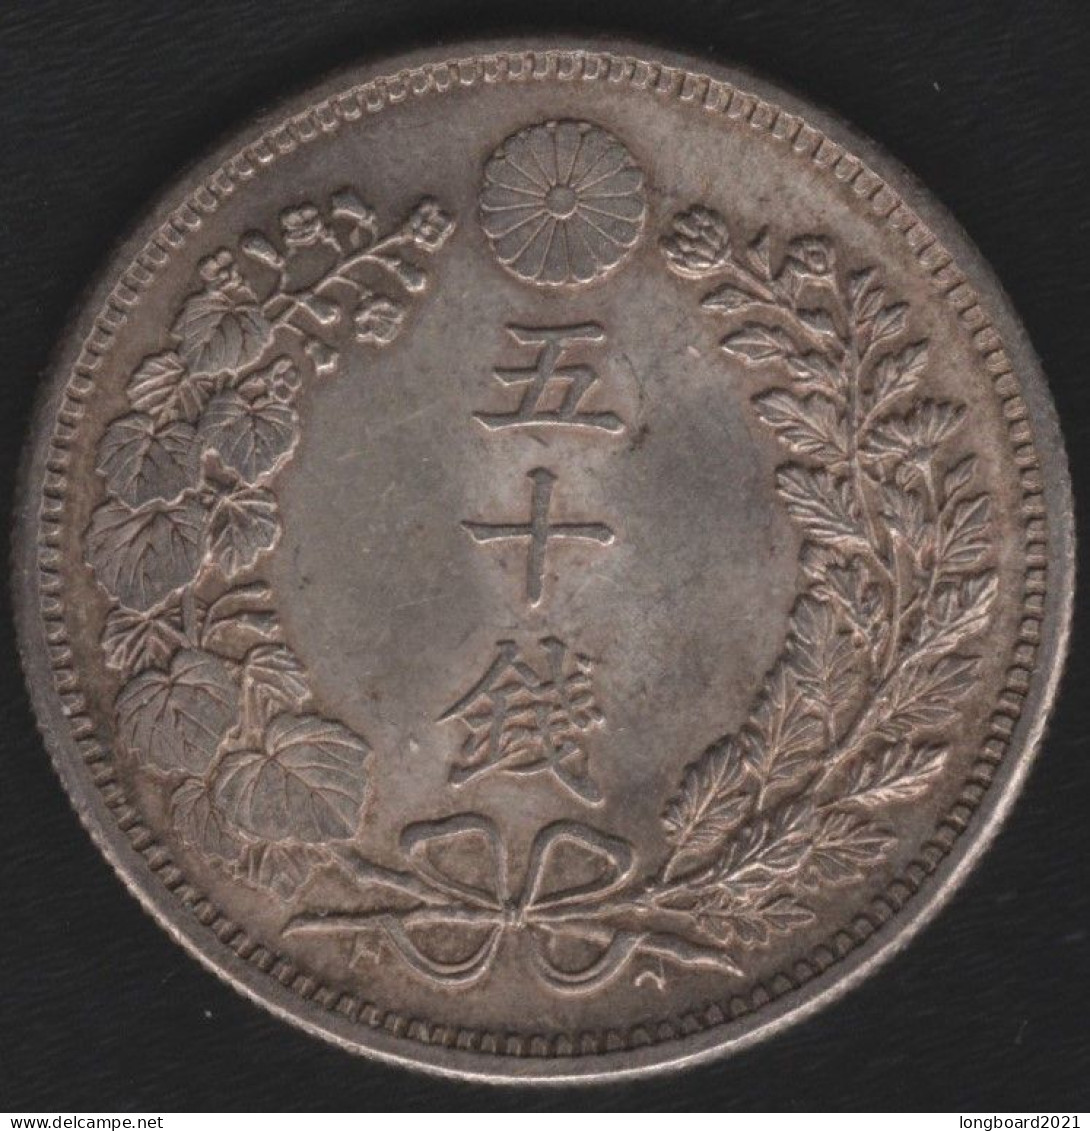 JAPAN - 50 SEN 1902 YEAR 35 -SILVER- - Giappone